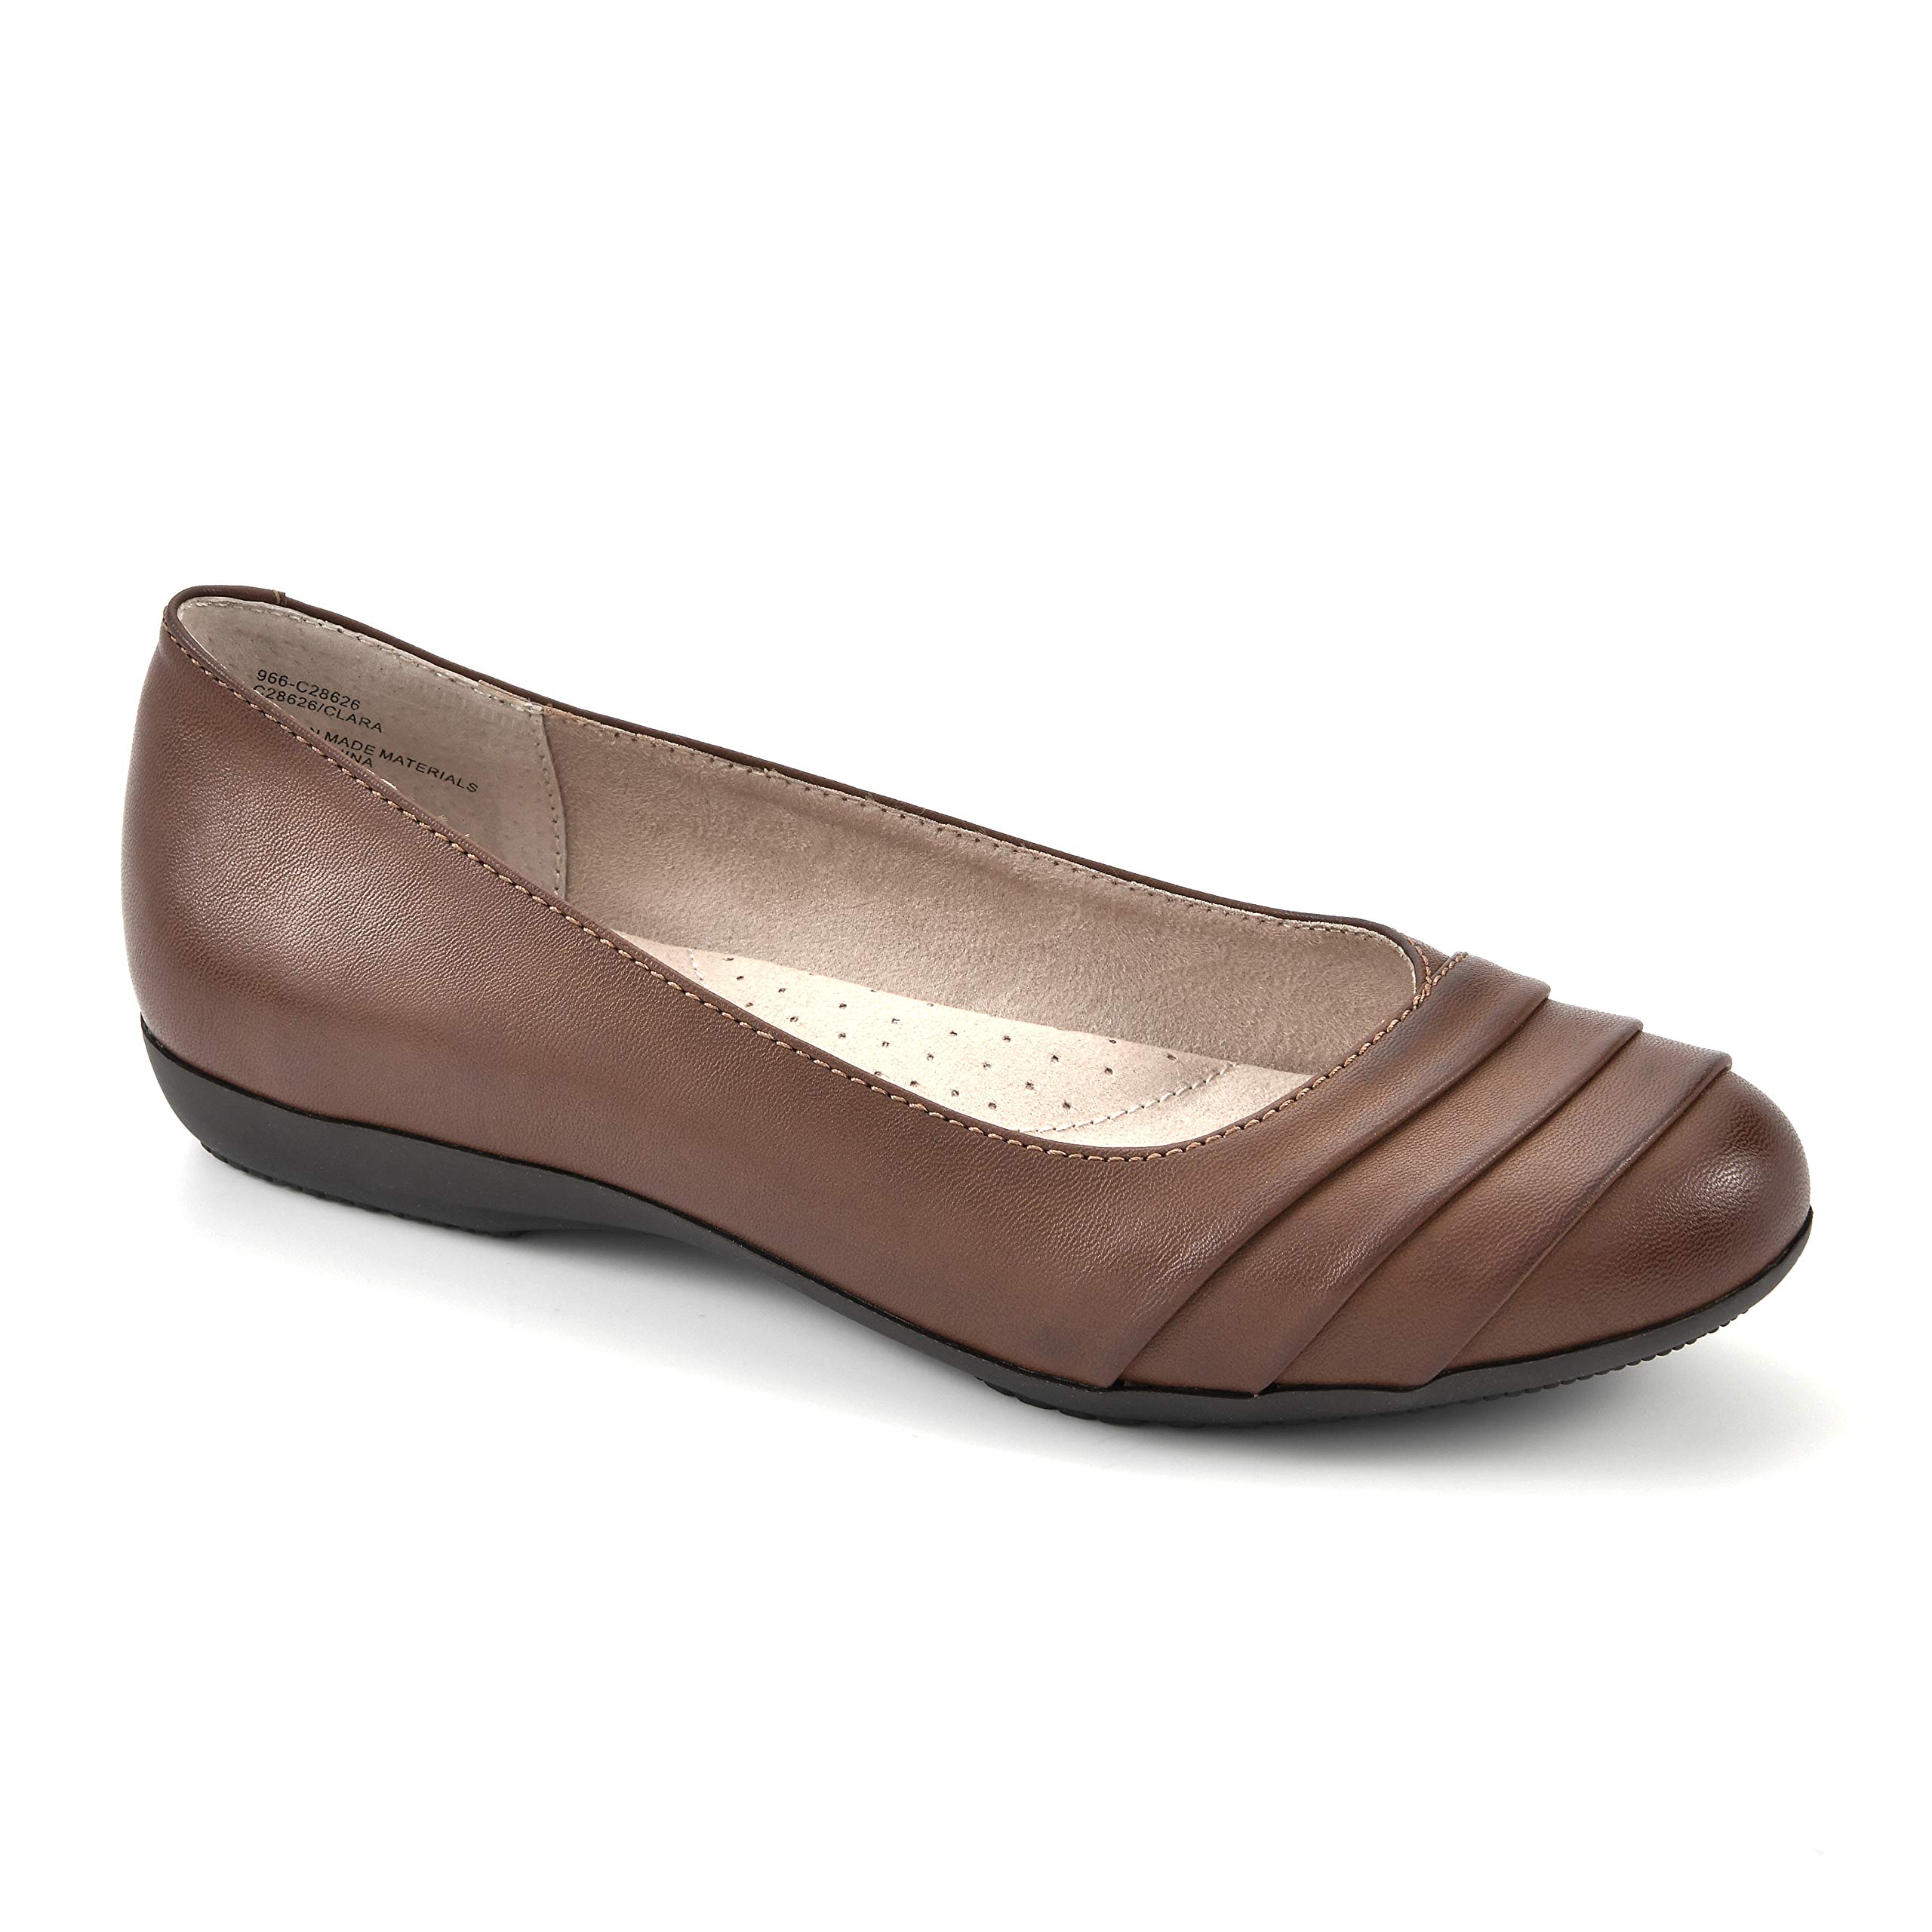 CLIFFS BY WHITE MOUNTAIN Women's Shoes Clara Ballet Flat